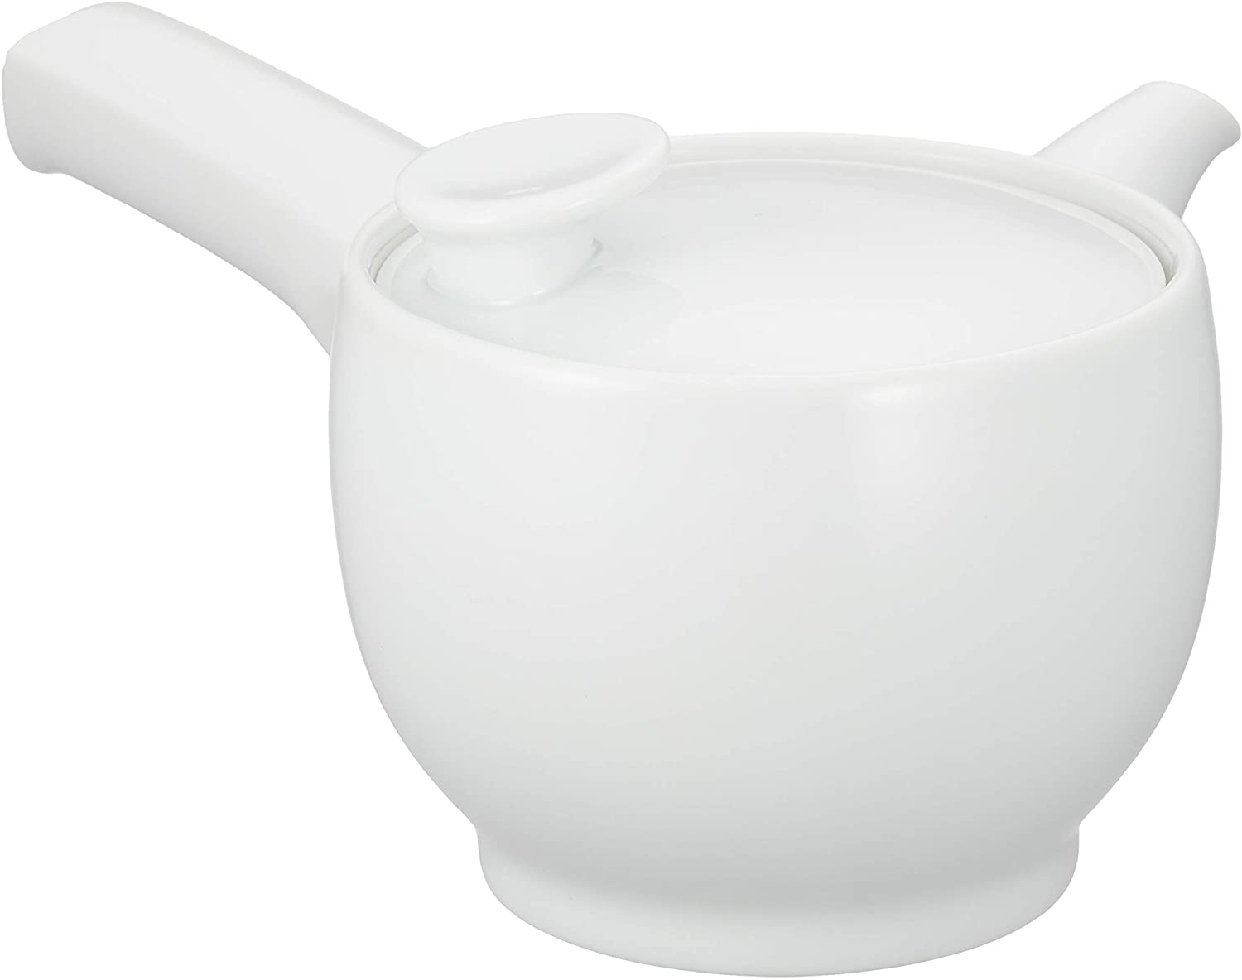 白山陶器(HAKUSAN) 茶和 急須 白磁の商品画像1 